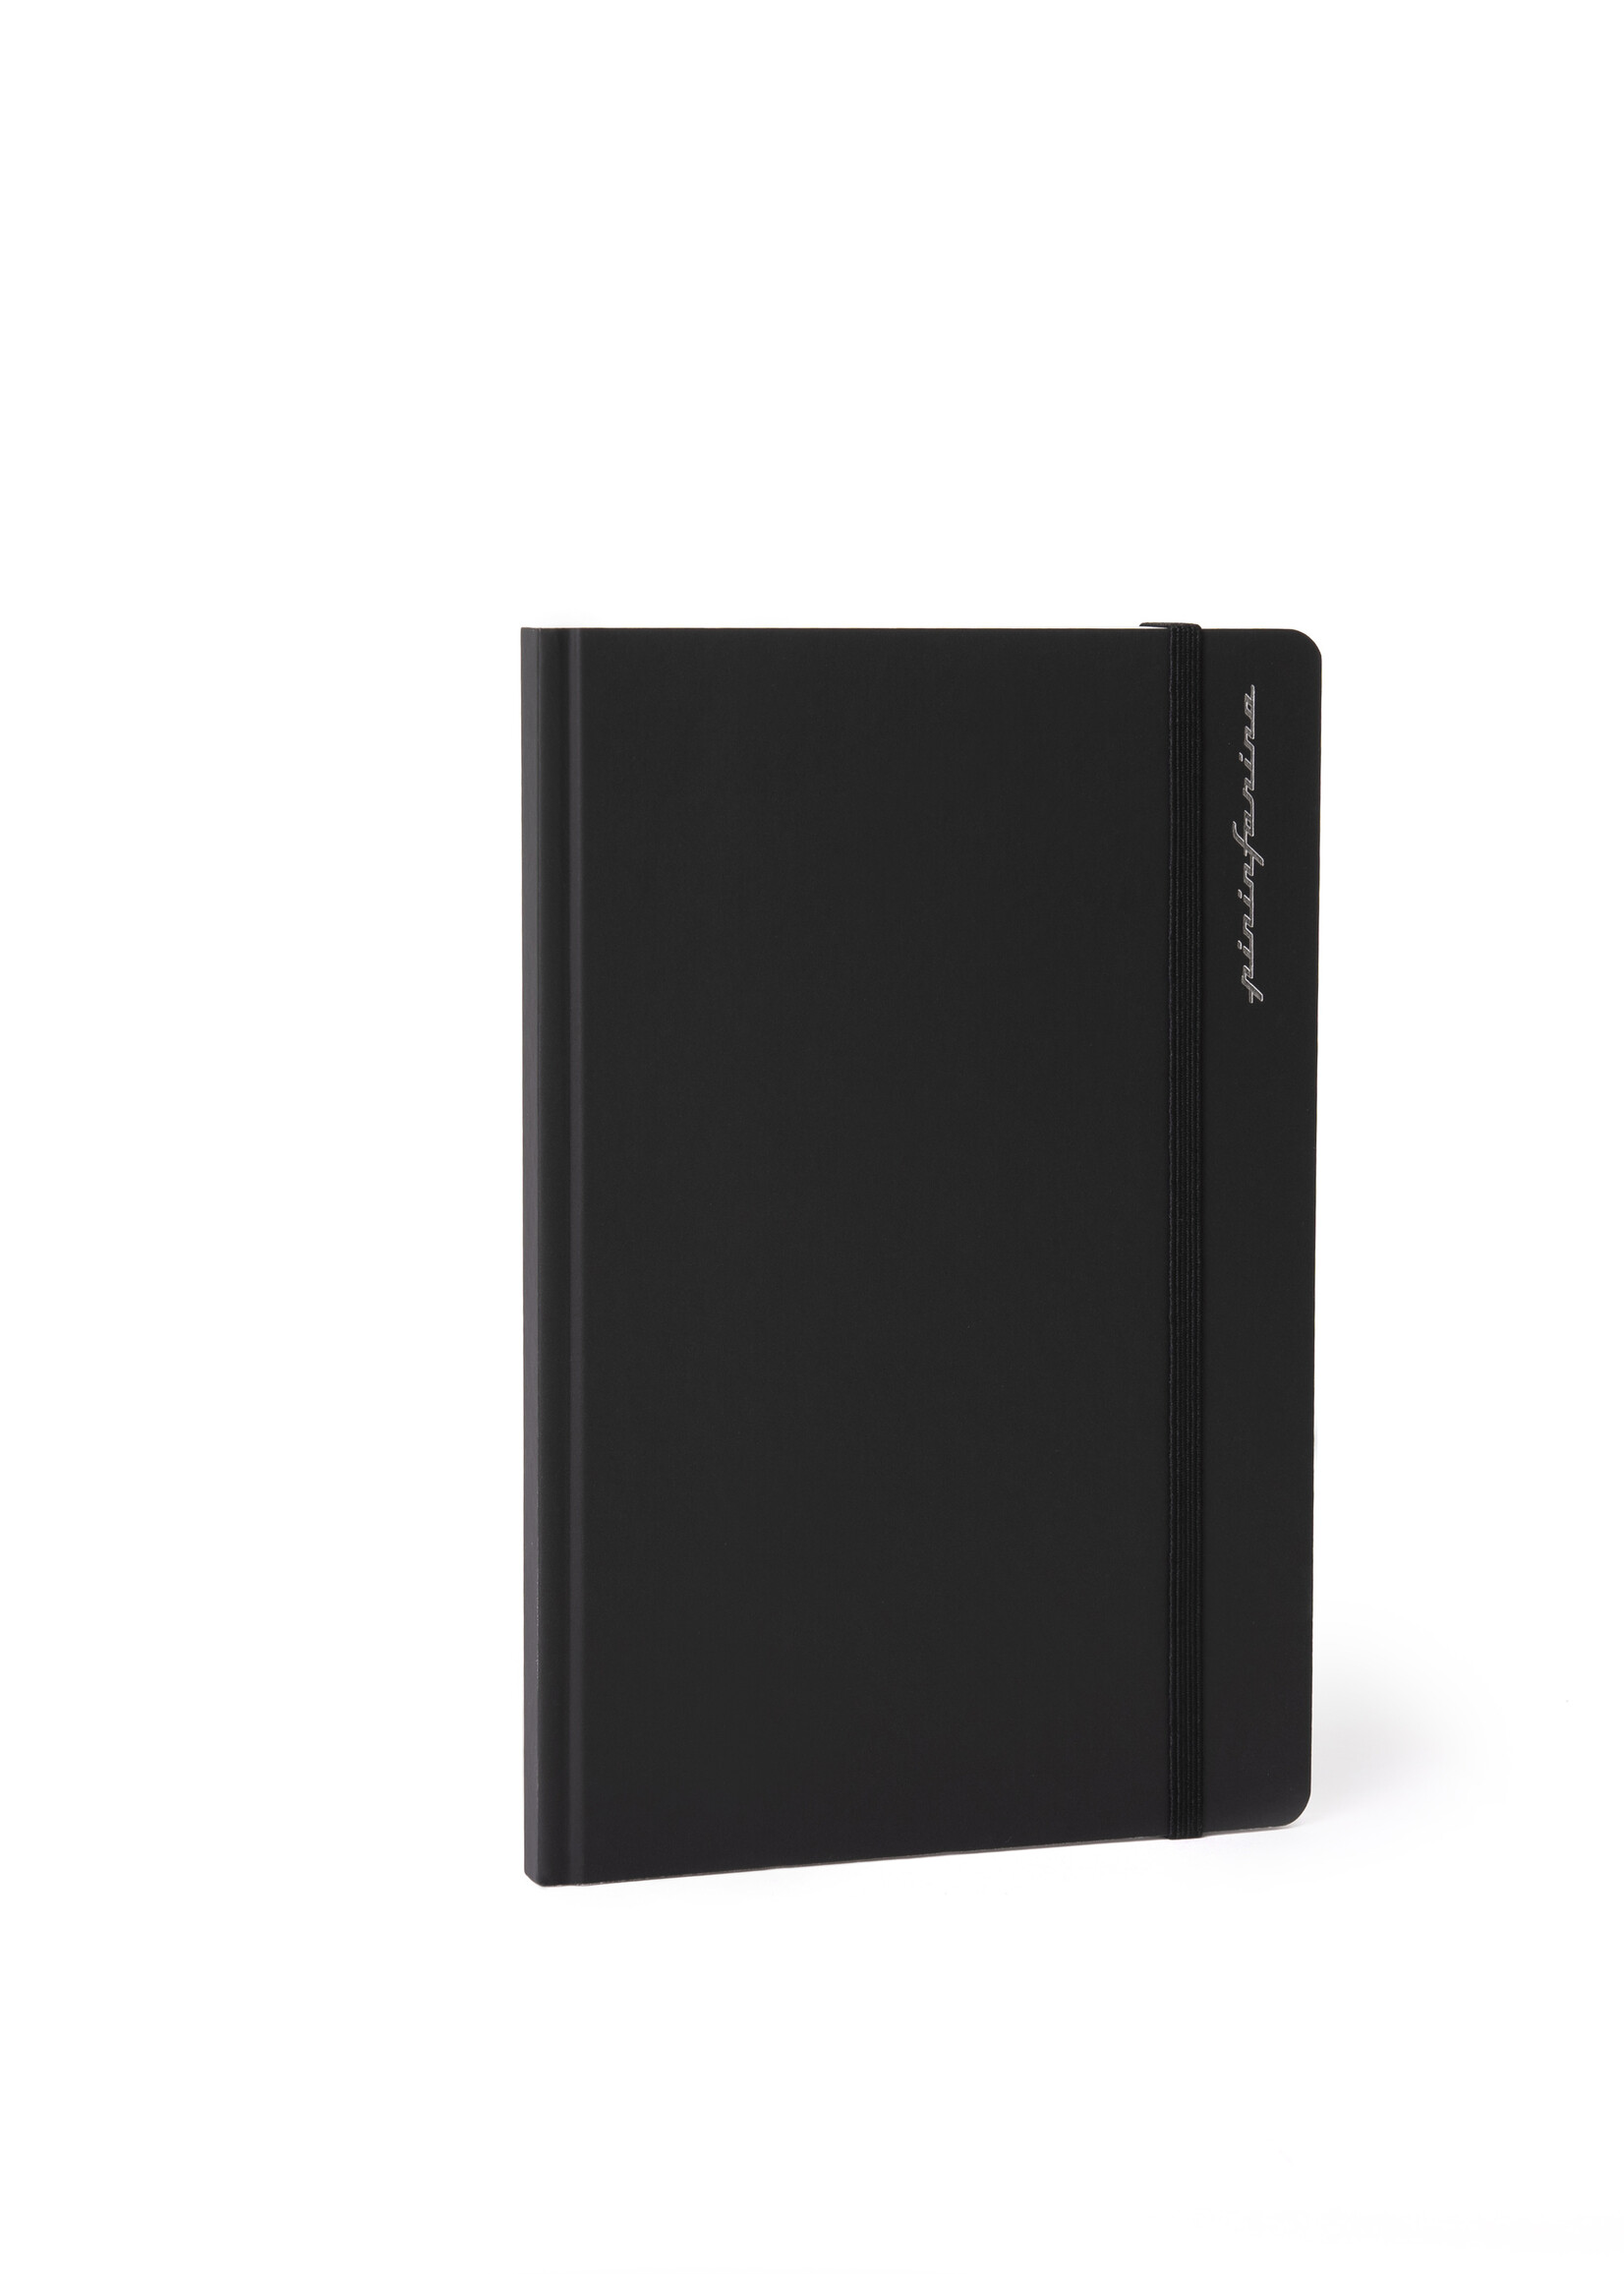 Pininfarina Notebook A5 Hard Cover Stone Paper Ruled Black